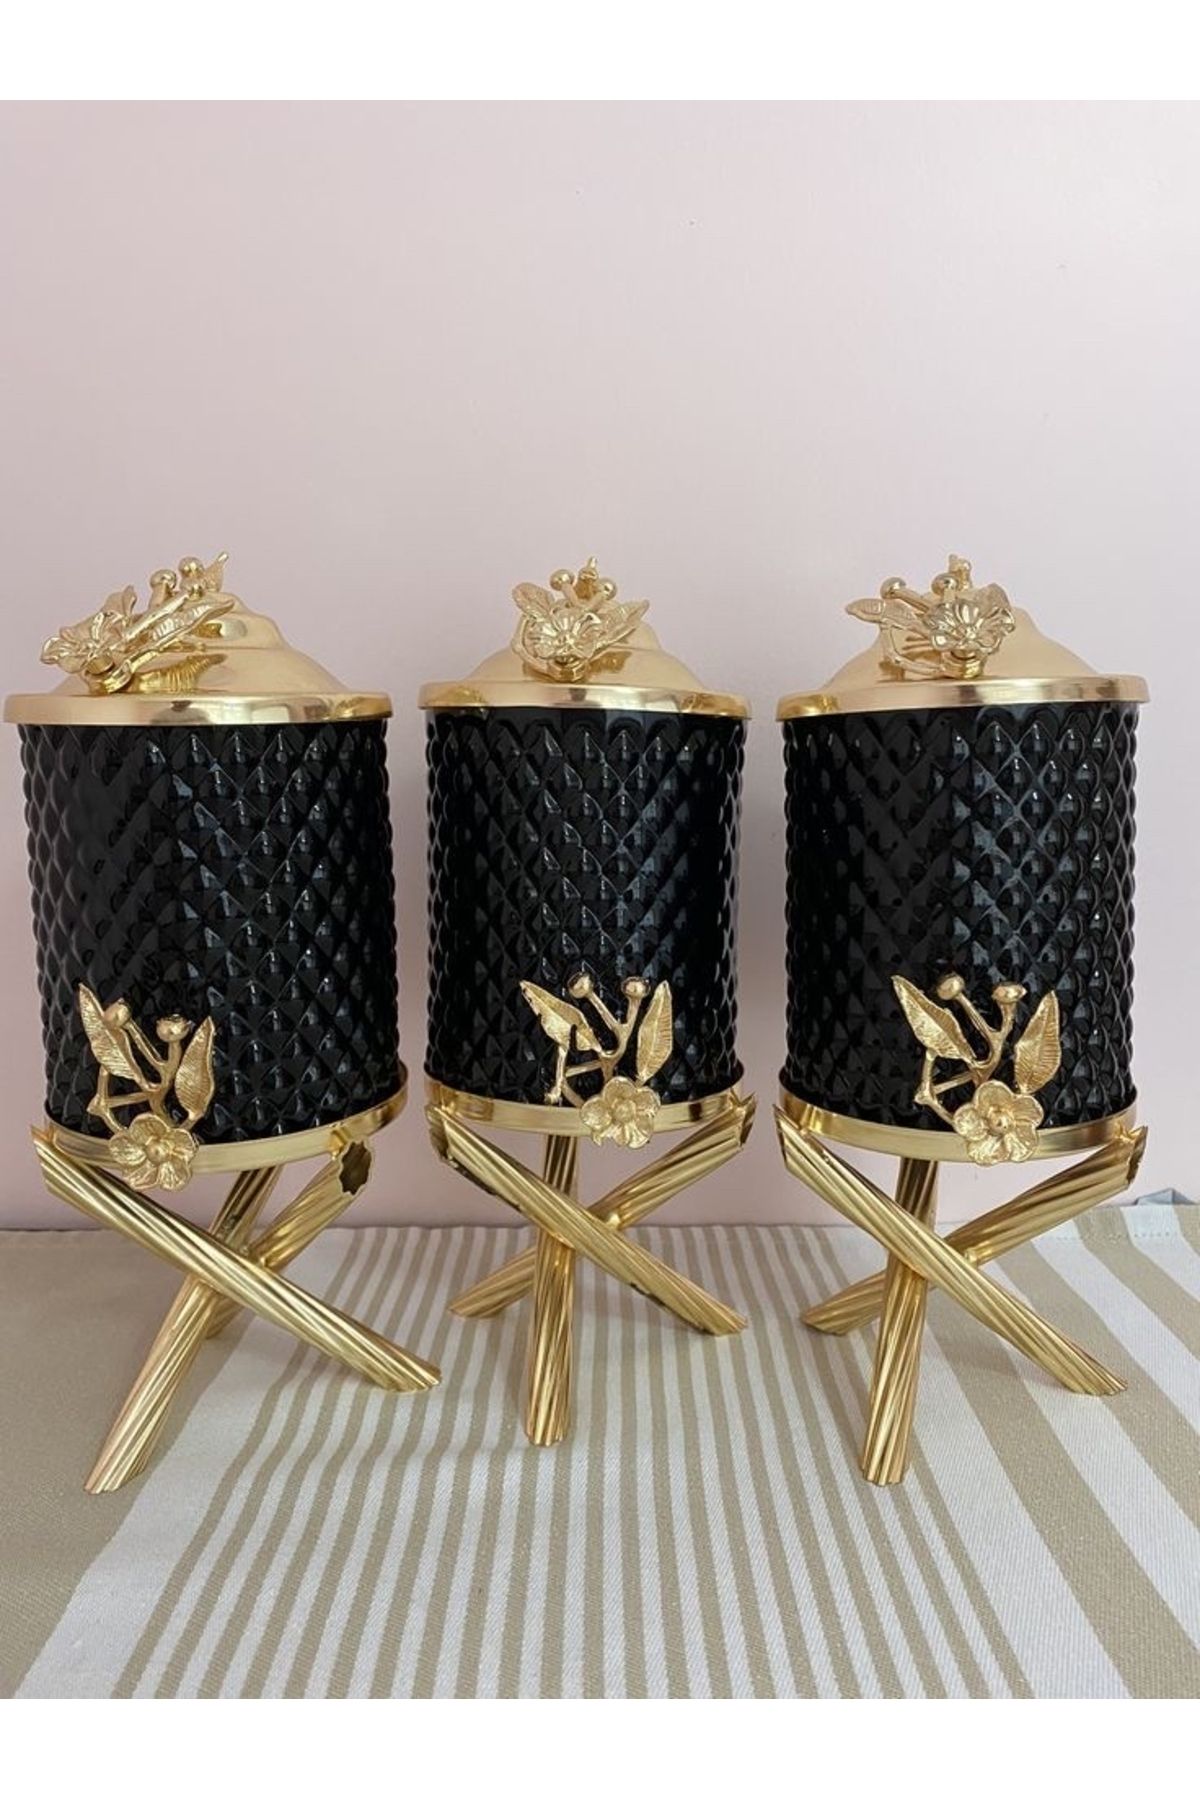 vanilya accessory Siyah kristal camlı üçlü lux kavanoz takımı gold